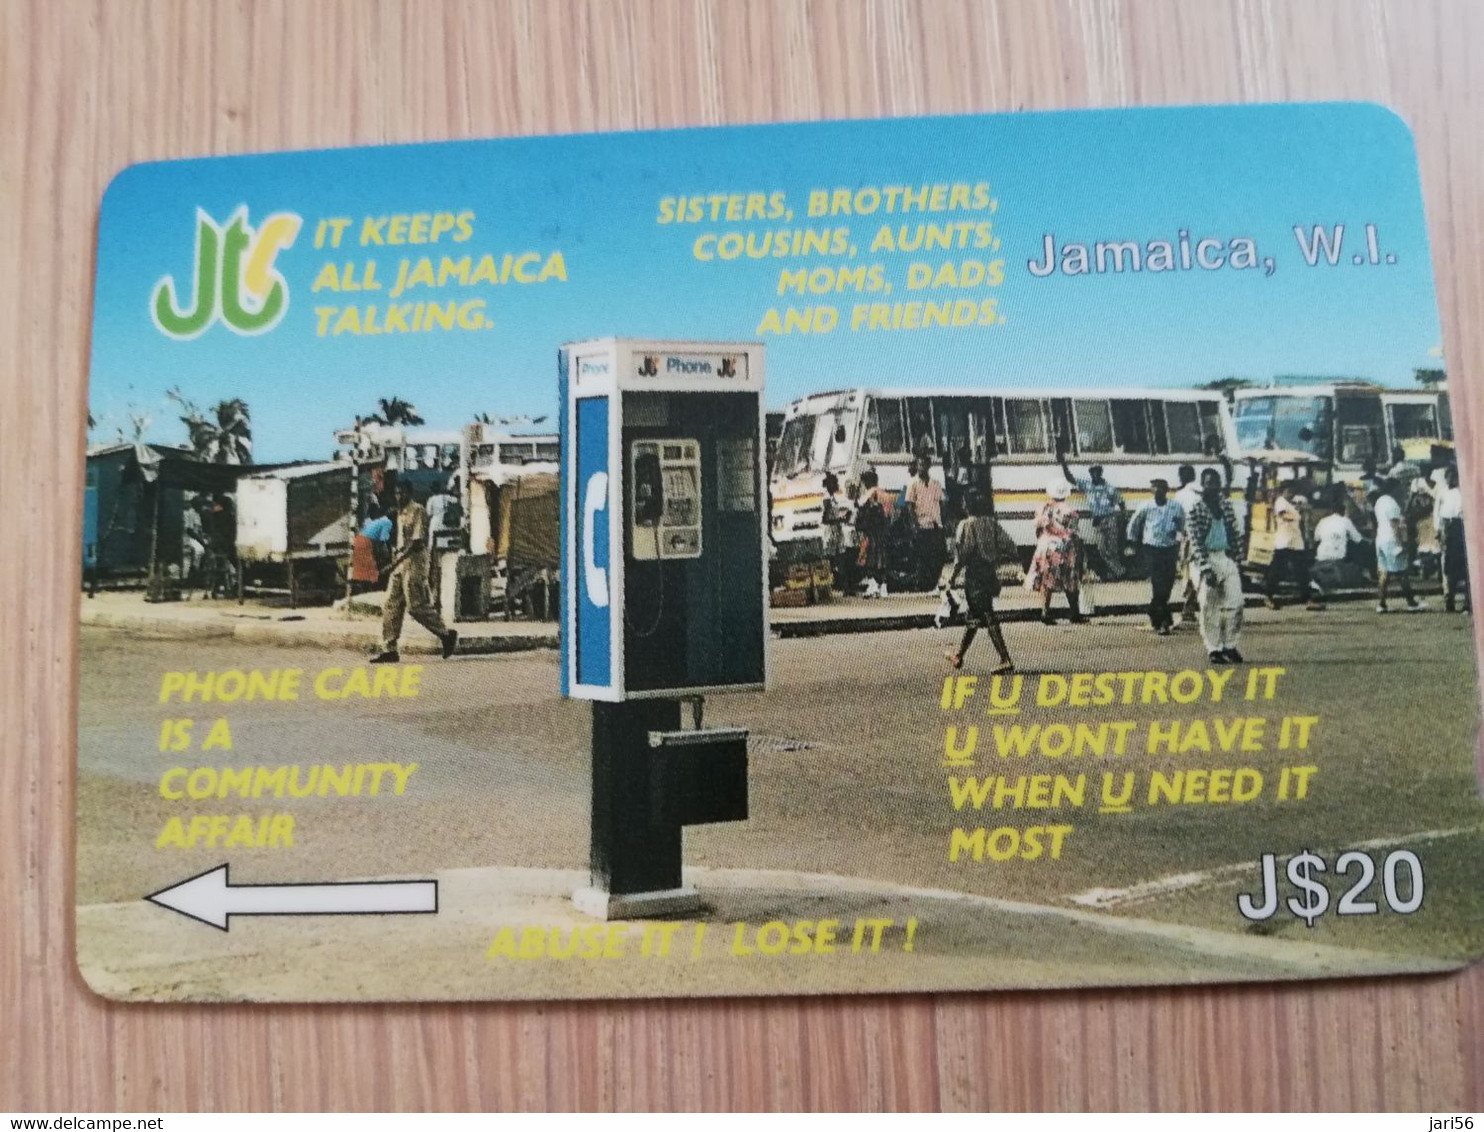 JAMAICA  J$20-  GPT CARD   KEEPS JAMAICA TALKING CONTROL NR: 14JAMD   Fine Used Card  **3234** - Giamaica